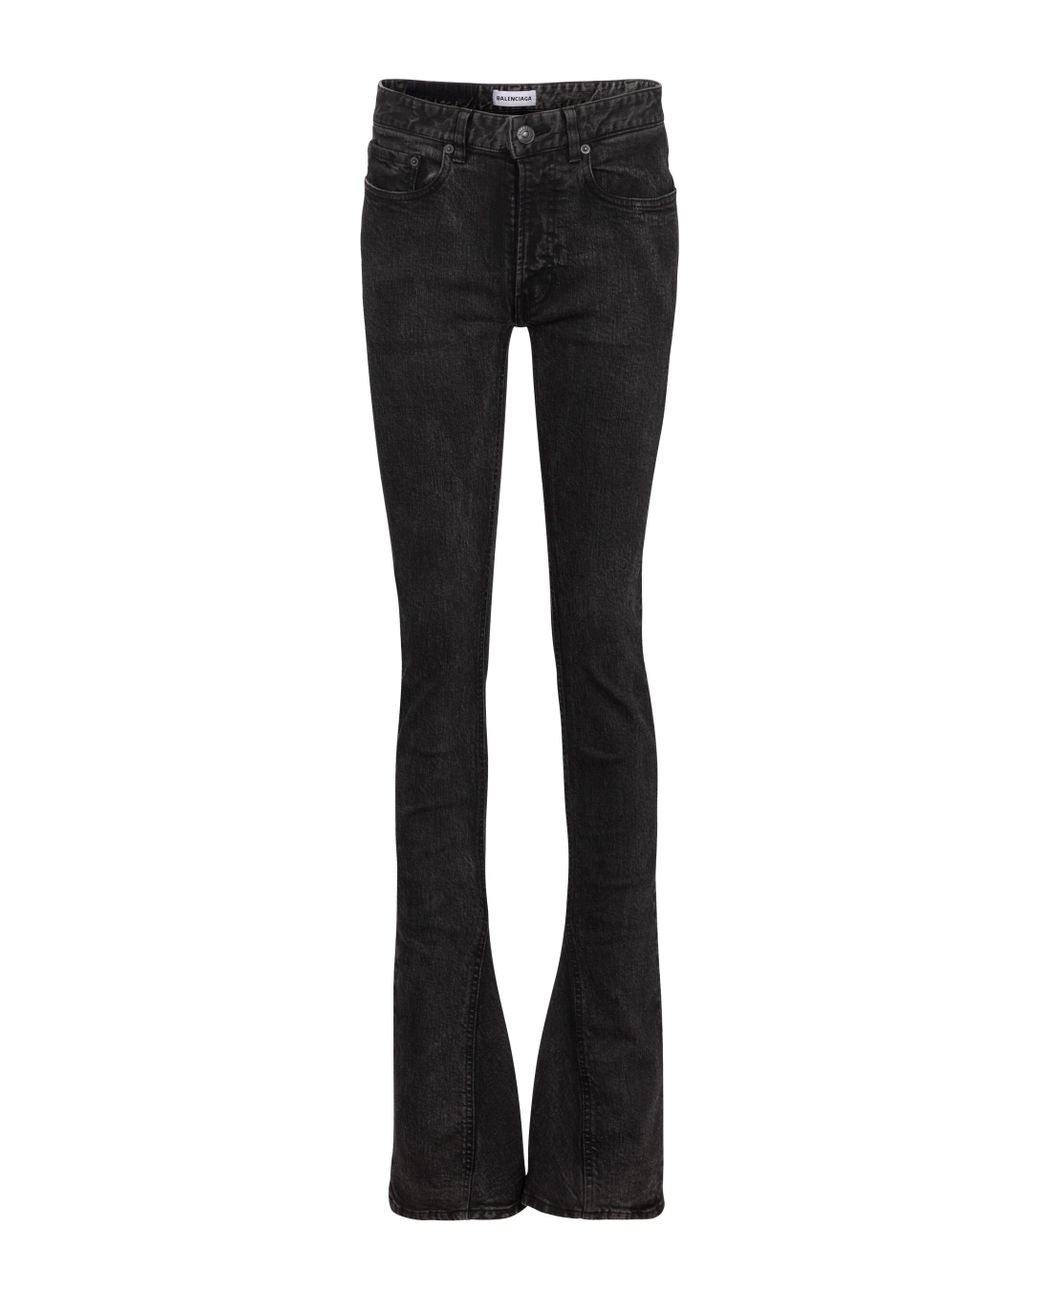 Balenciaga Mid-rise Skinny Kick-flare Jeans in Black - Lyst